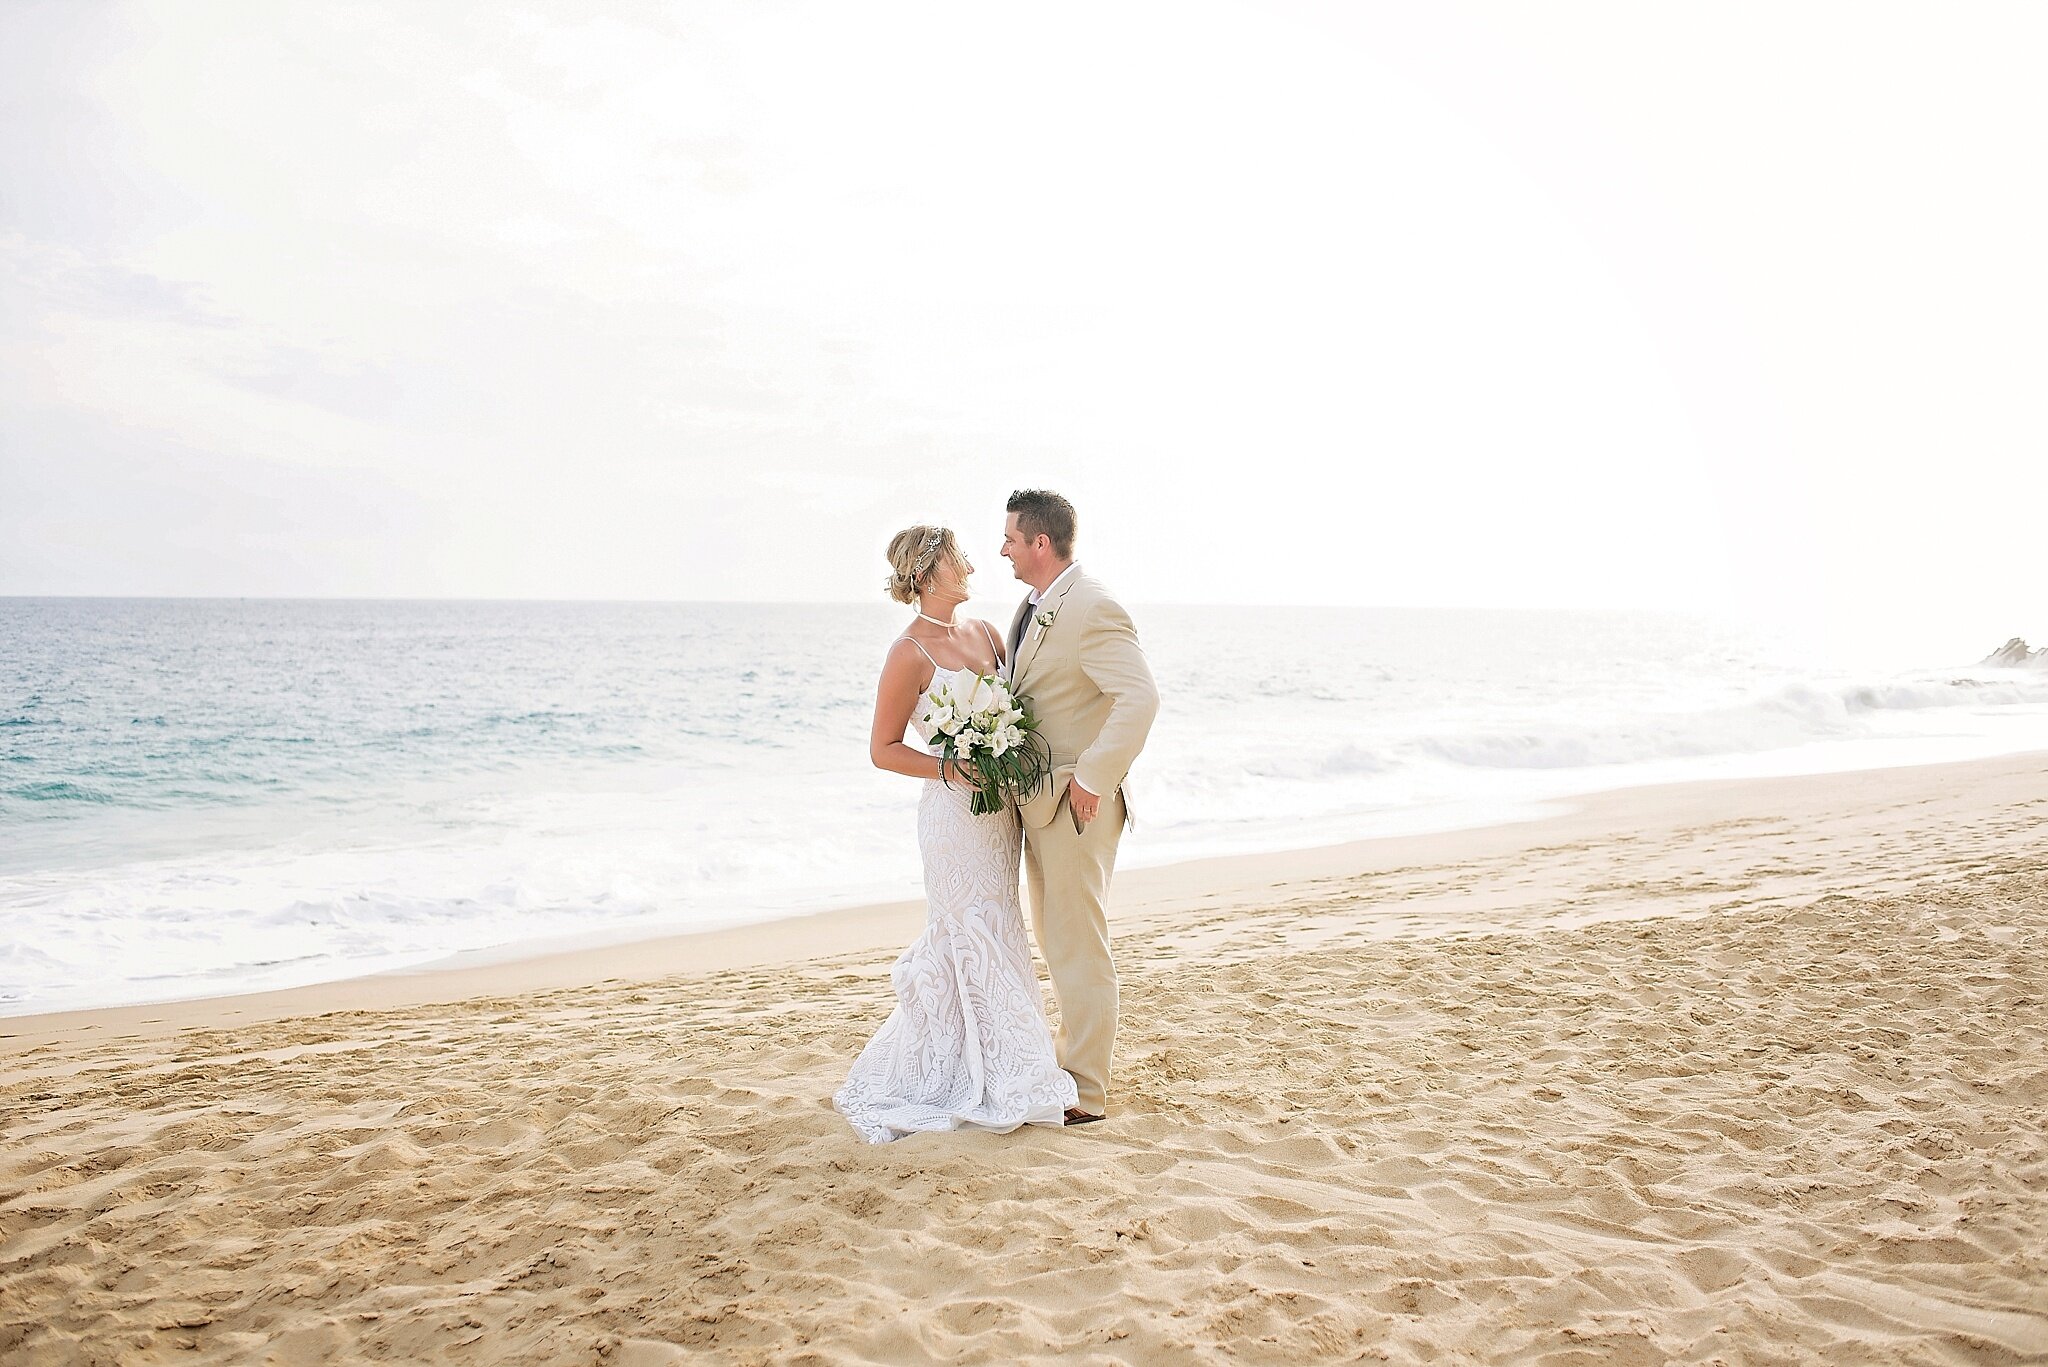 beach sunset portraits destination wedding cabo san lucas mexico